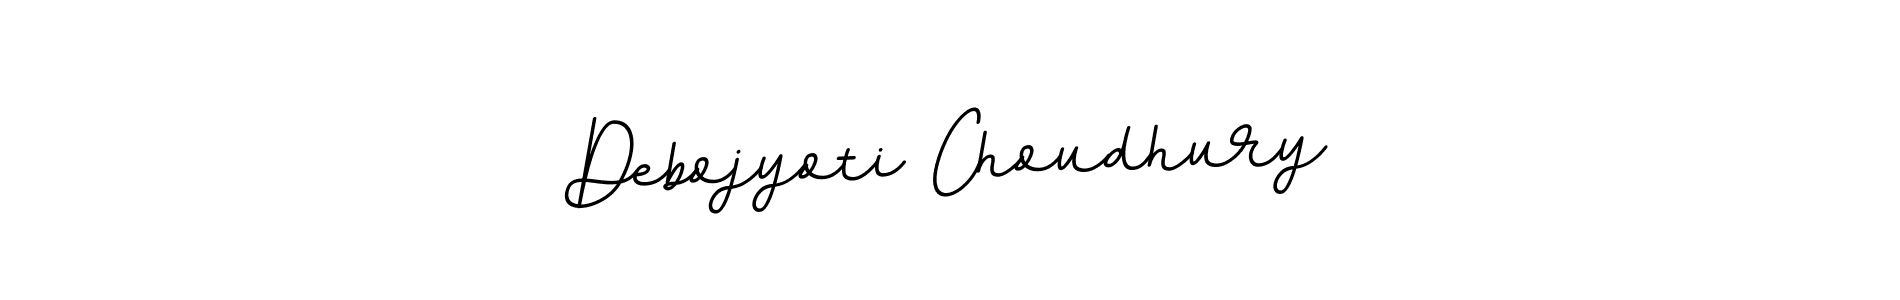 How to Draw Debojyoti Choudhury signature style? BallpointsItalic-DORy9 is a latest design signature styles for name Debojyoti Choudhury. Debojyoti Choudhury signature style 11 images and pictures png